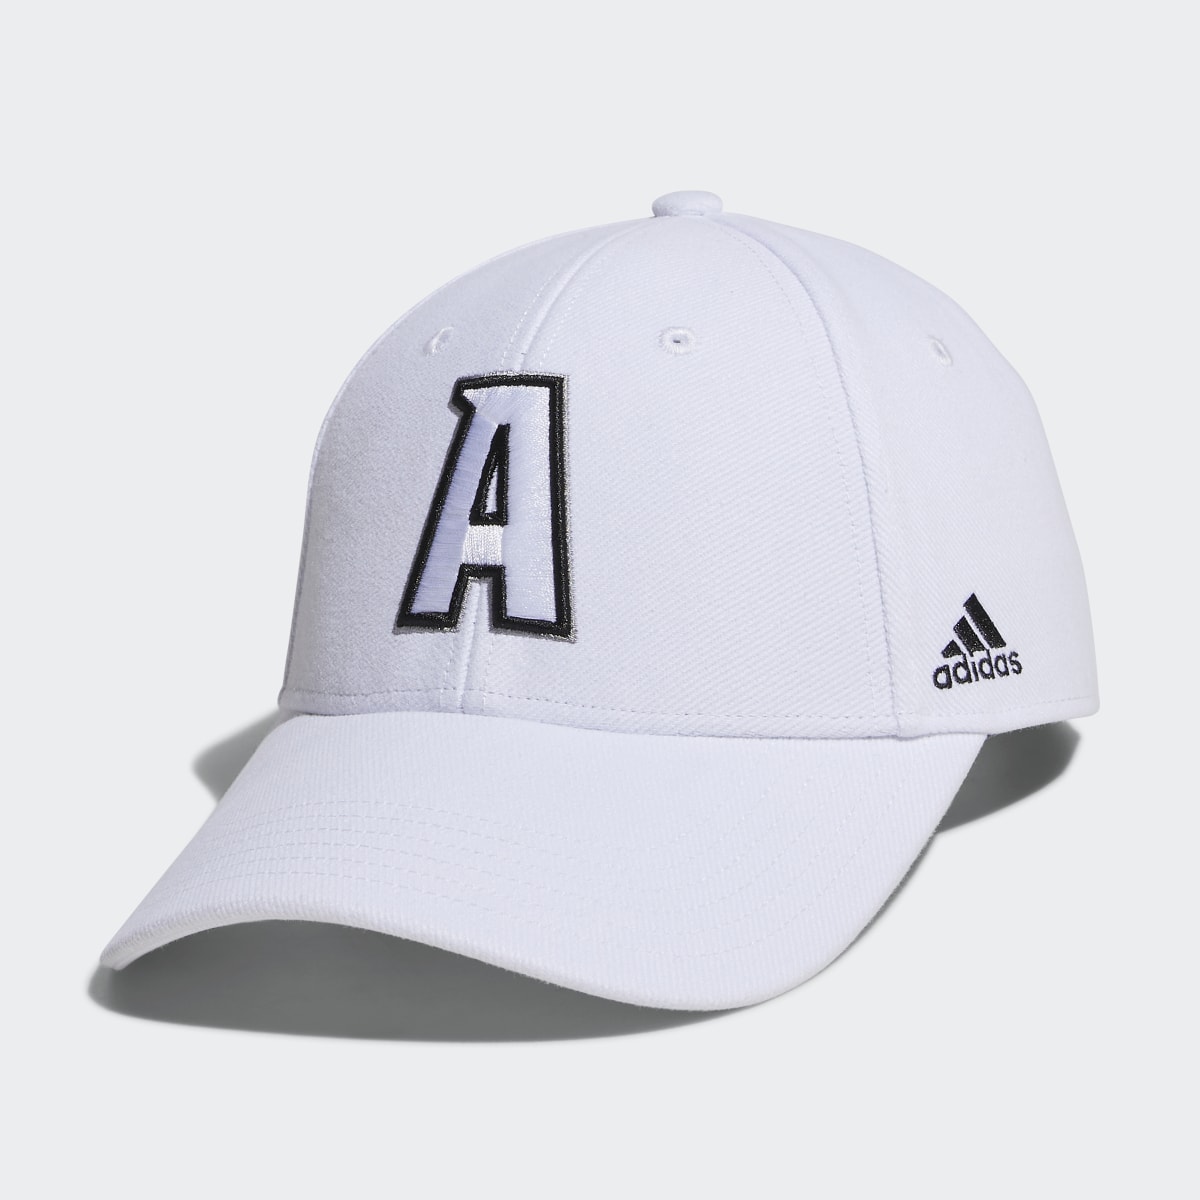 Adidas Structured Adjustable Hat. 4